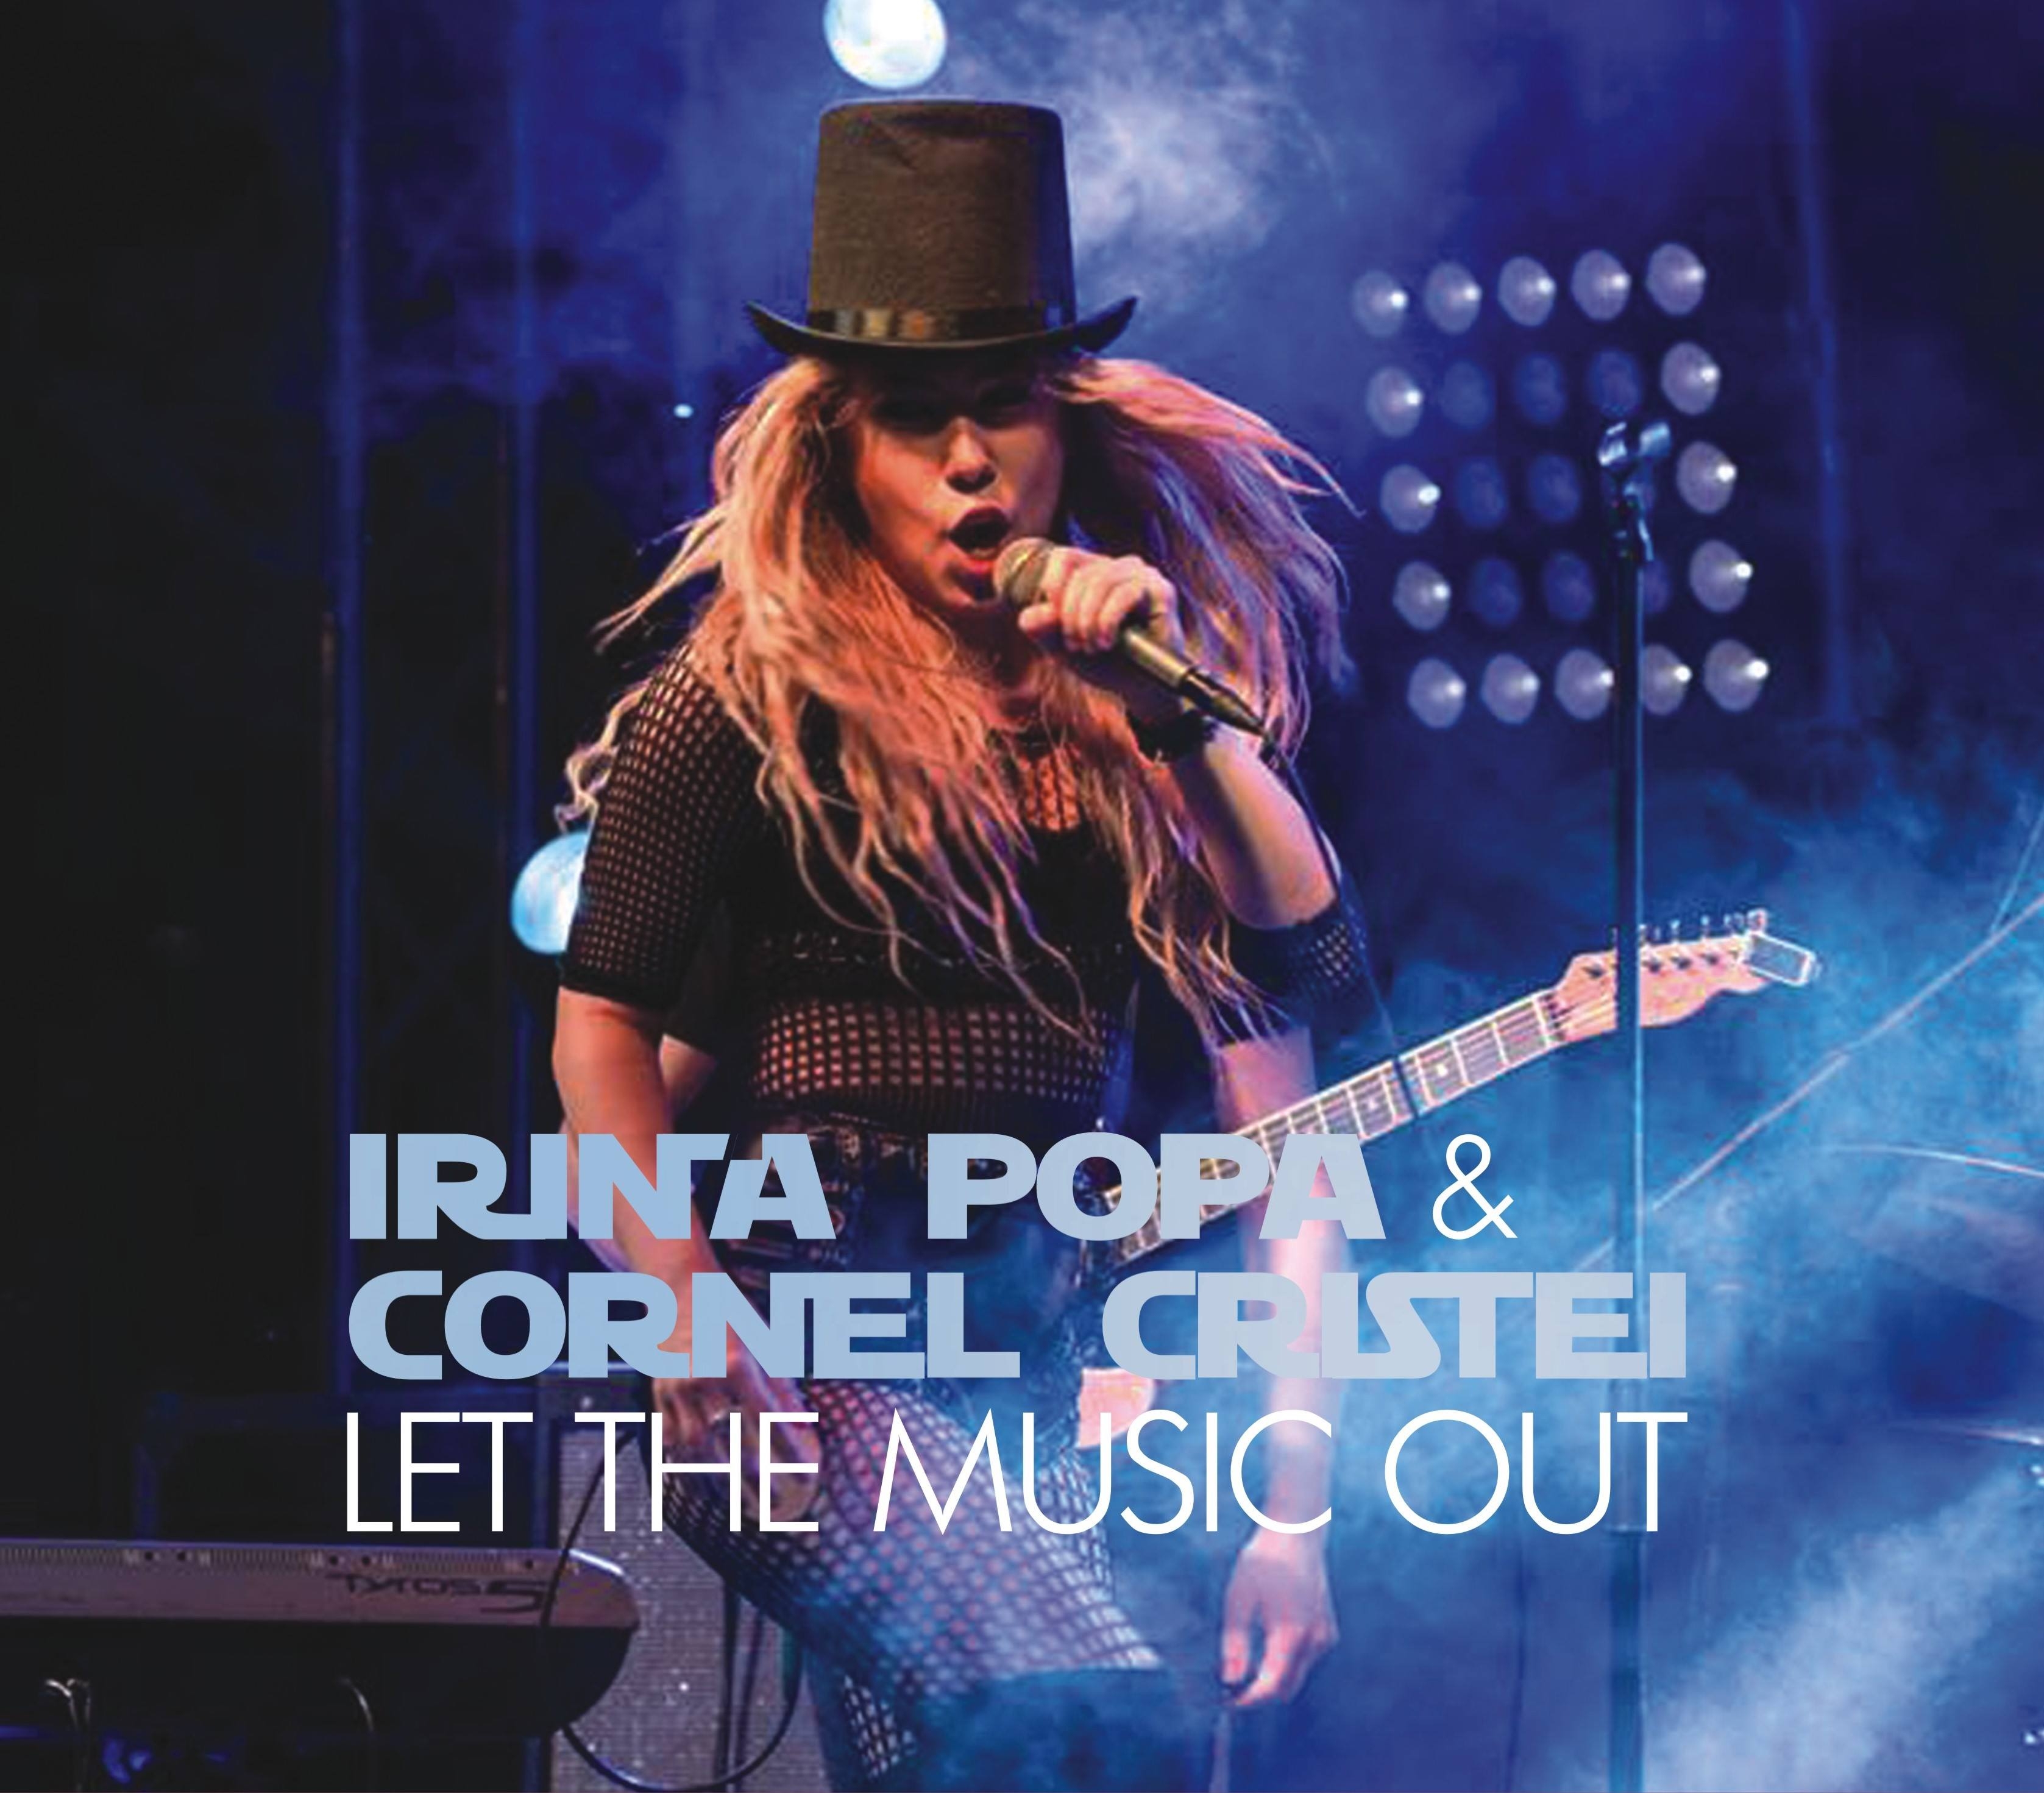 CD Irina Popa & Cornel Cristei - Let the music out